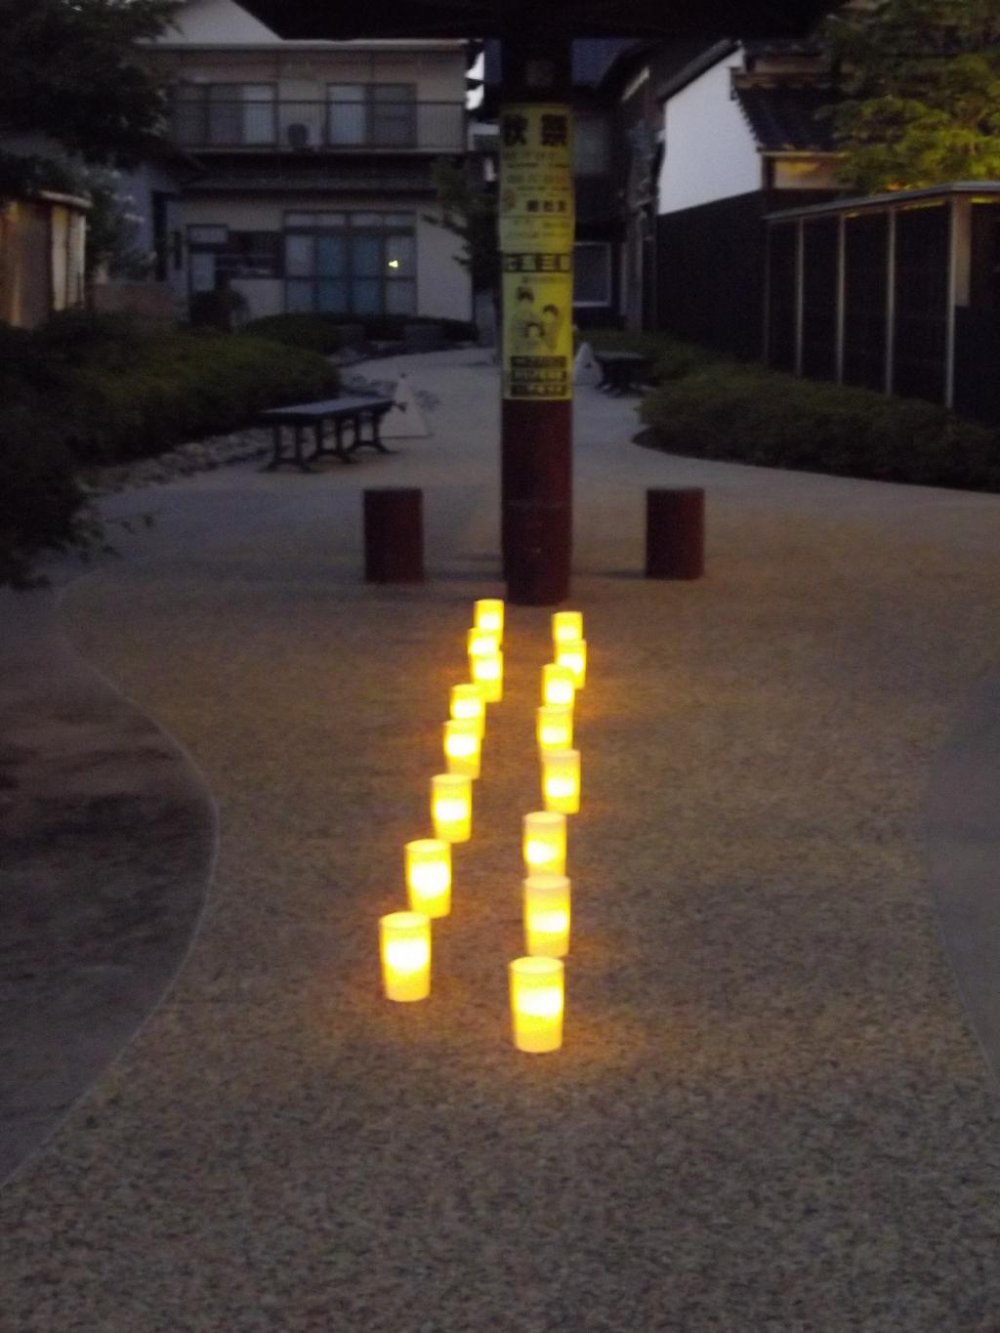 Lighting the street for nighttime activities, Soja City, Okayama